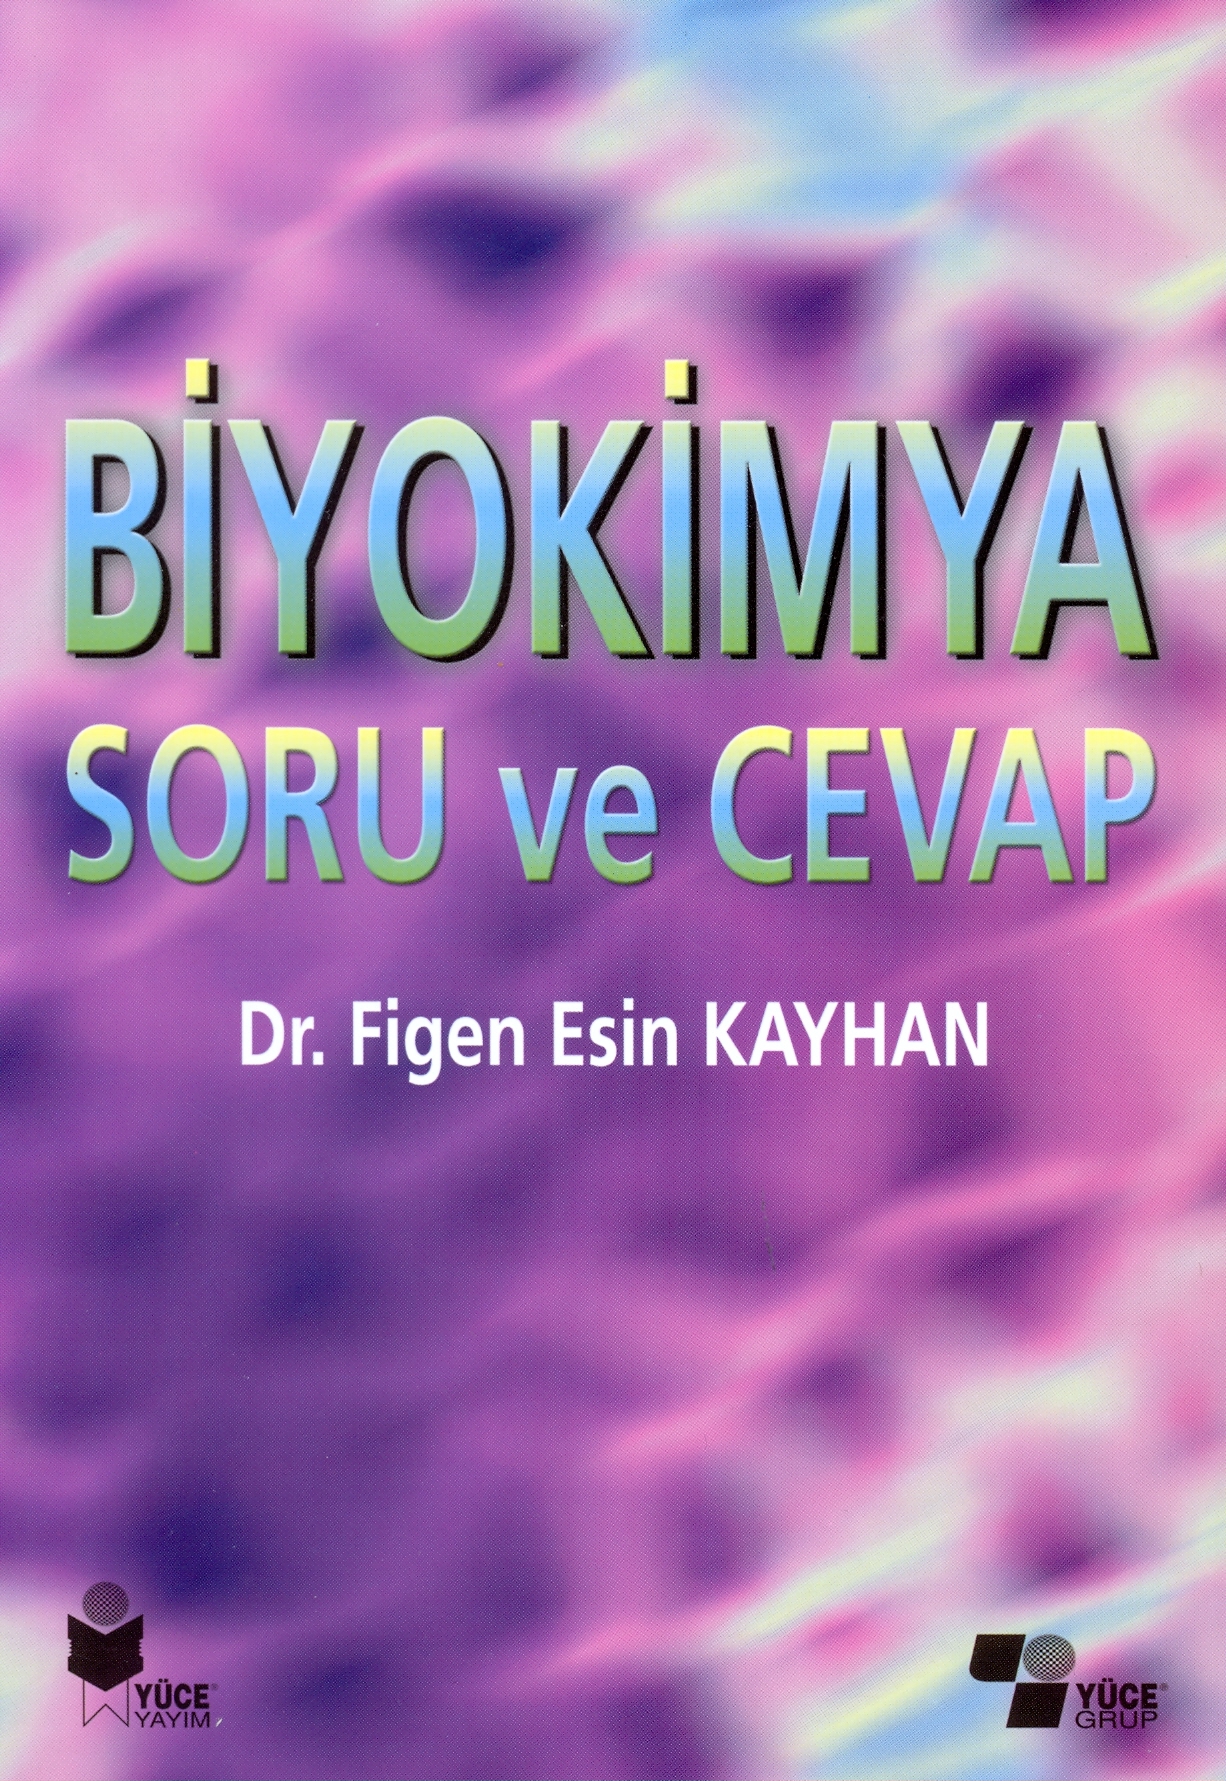 F.E._Kayhan.jpg (1.31 MB)